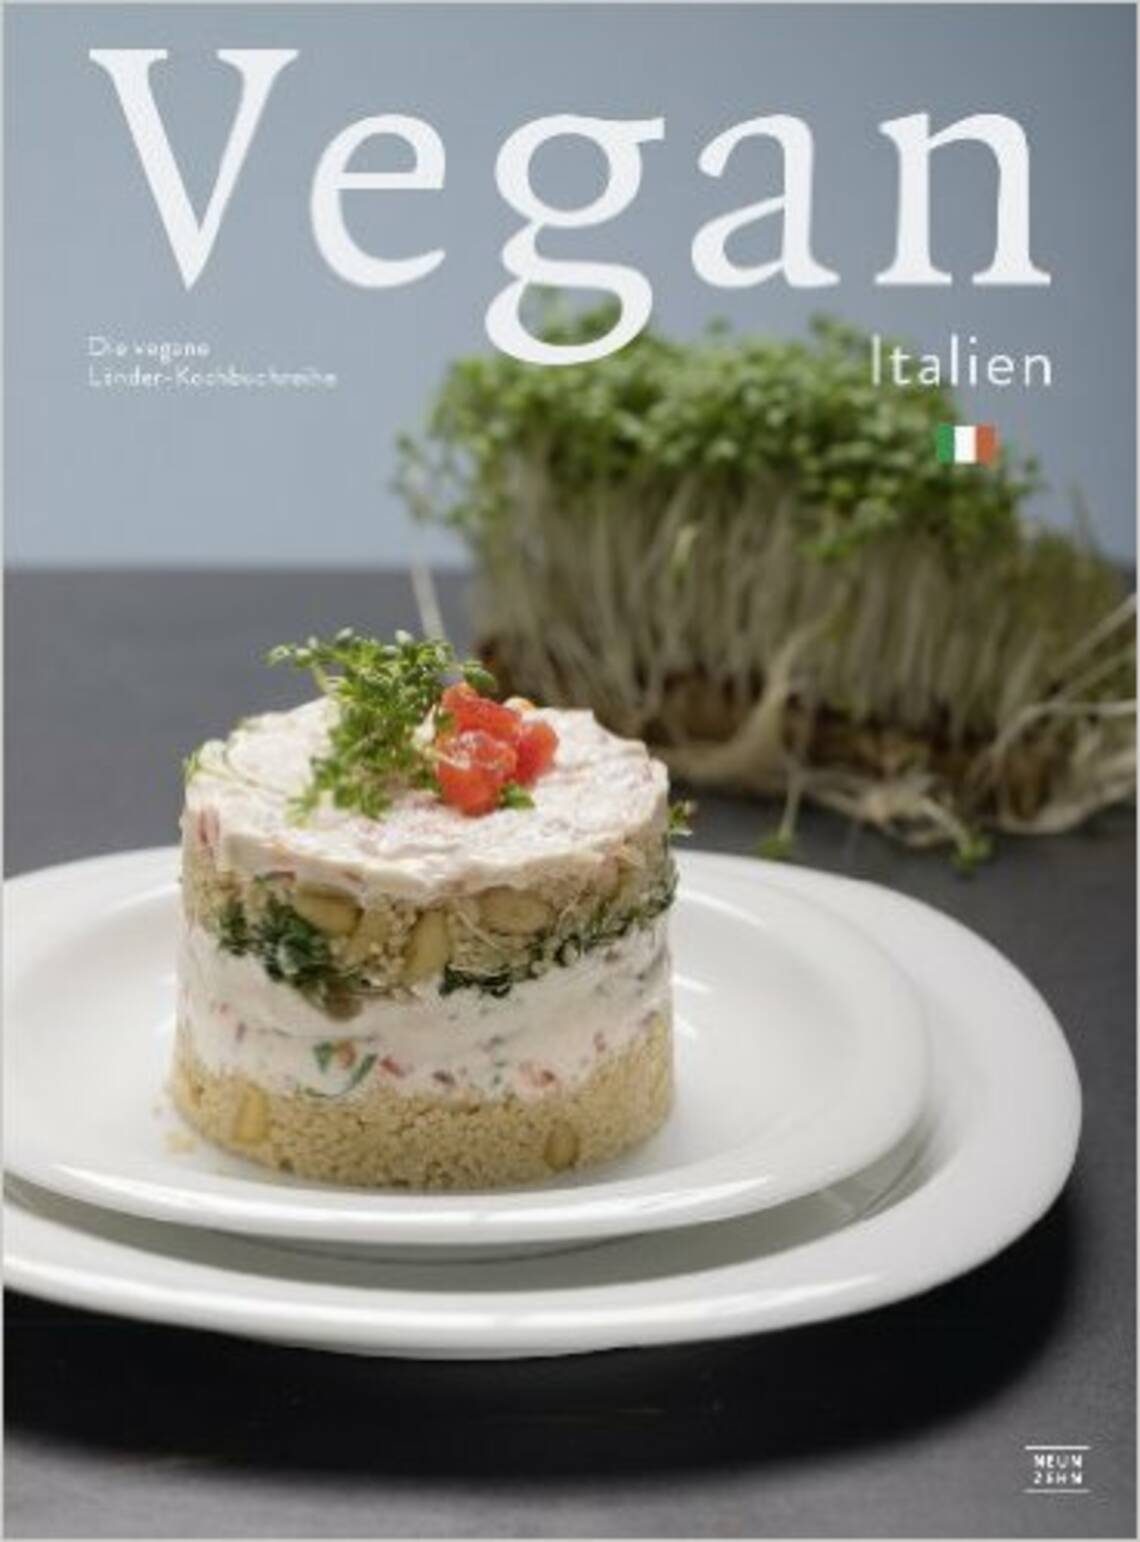 Italien Kochbuch: vegan italienisch kochen von NeunZehn Verlag